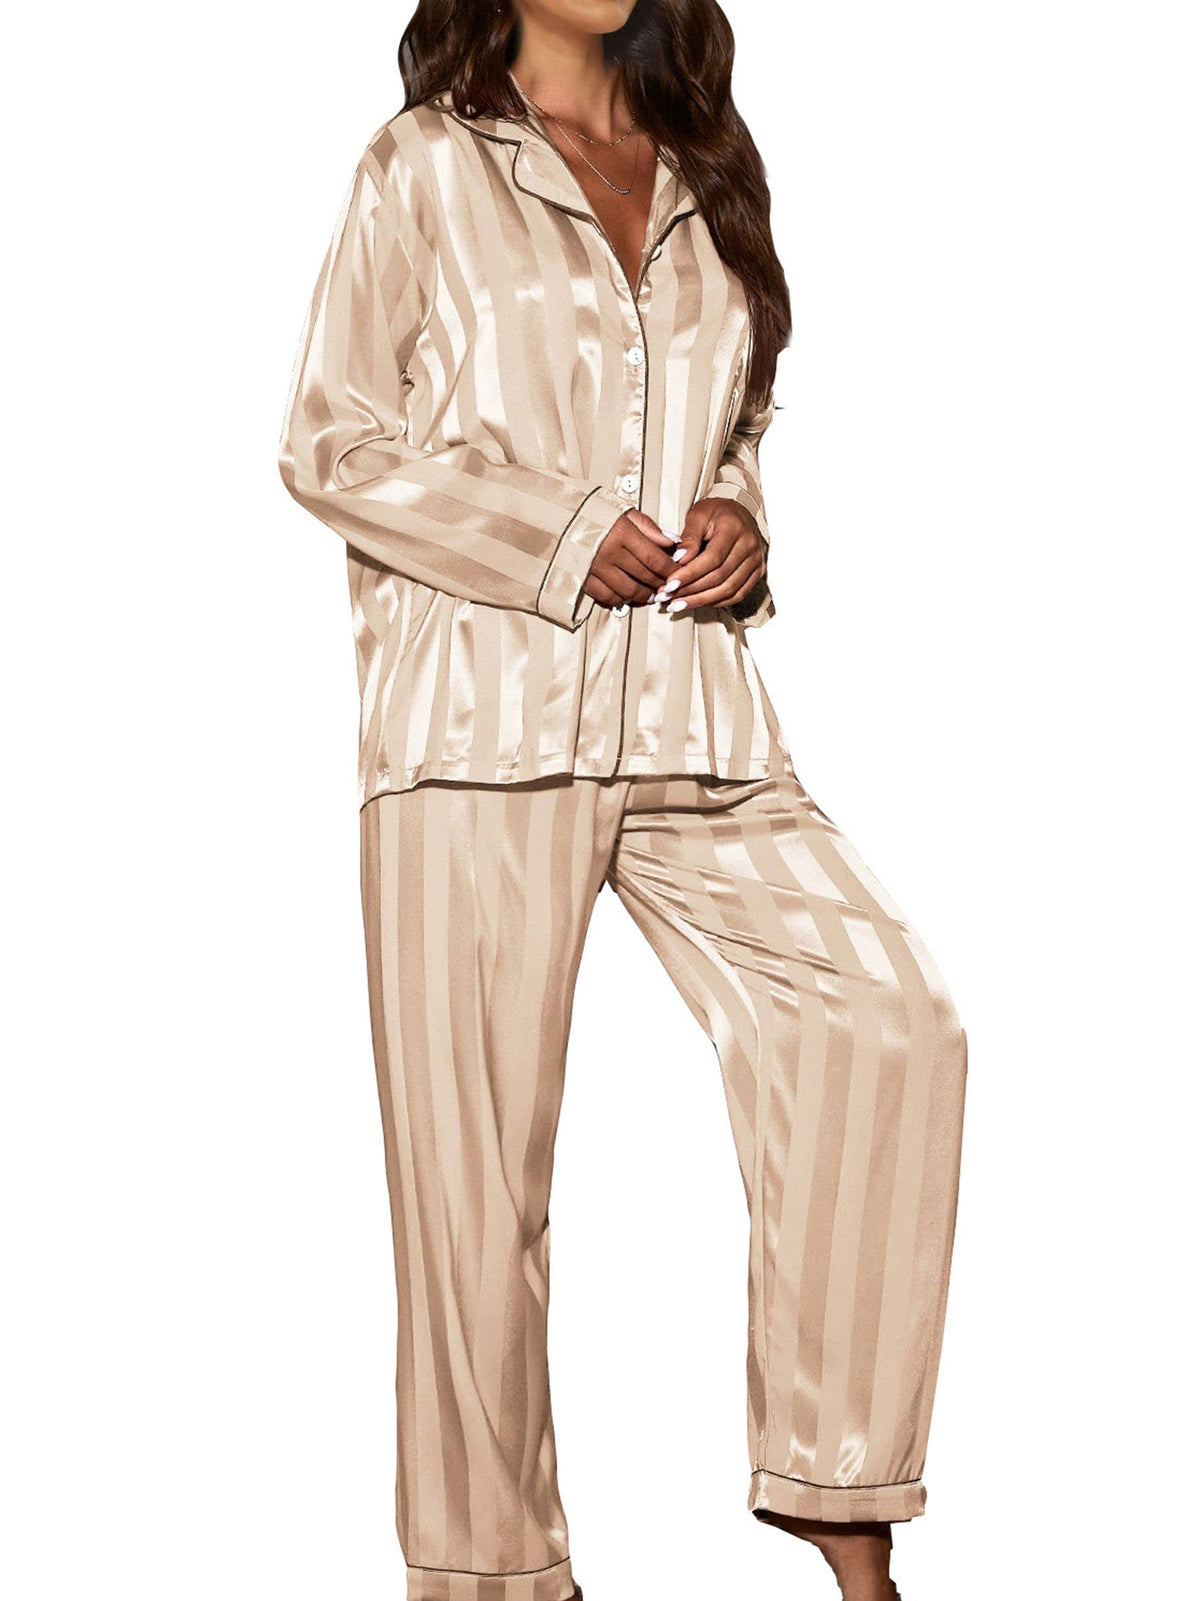 2 Piece Button Front Sleepwear Pants Set Loungewear: XL / Champagne